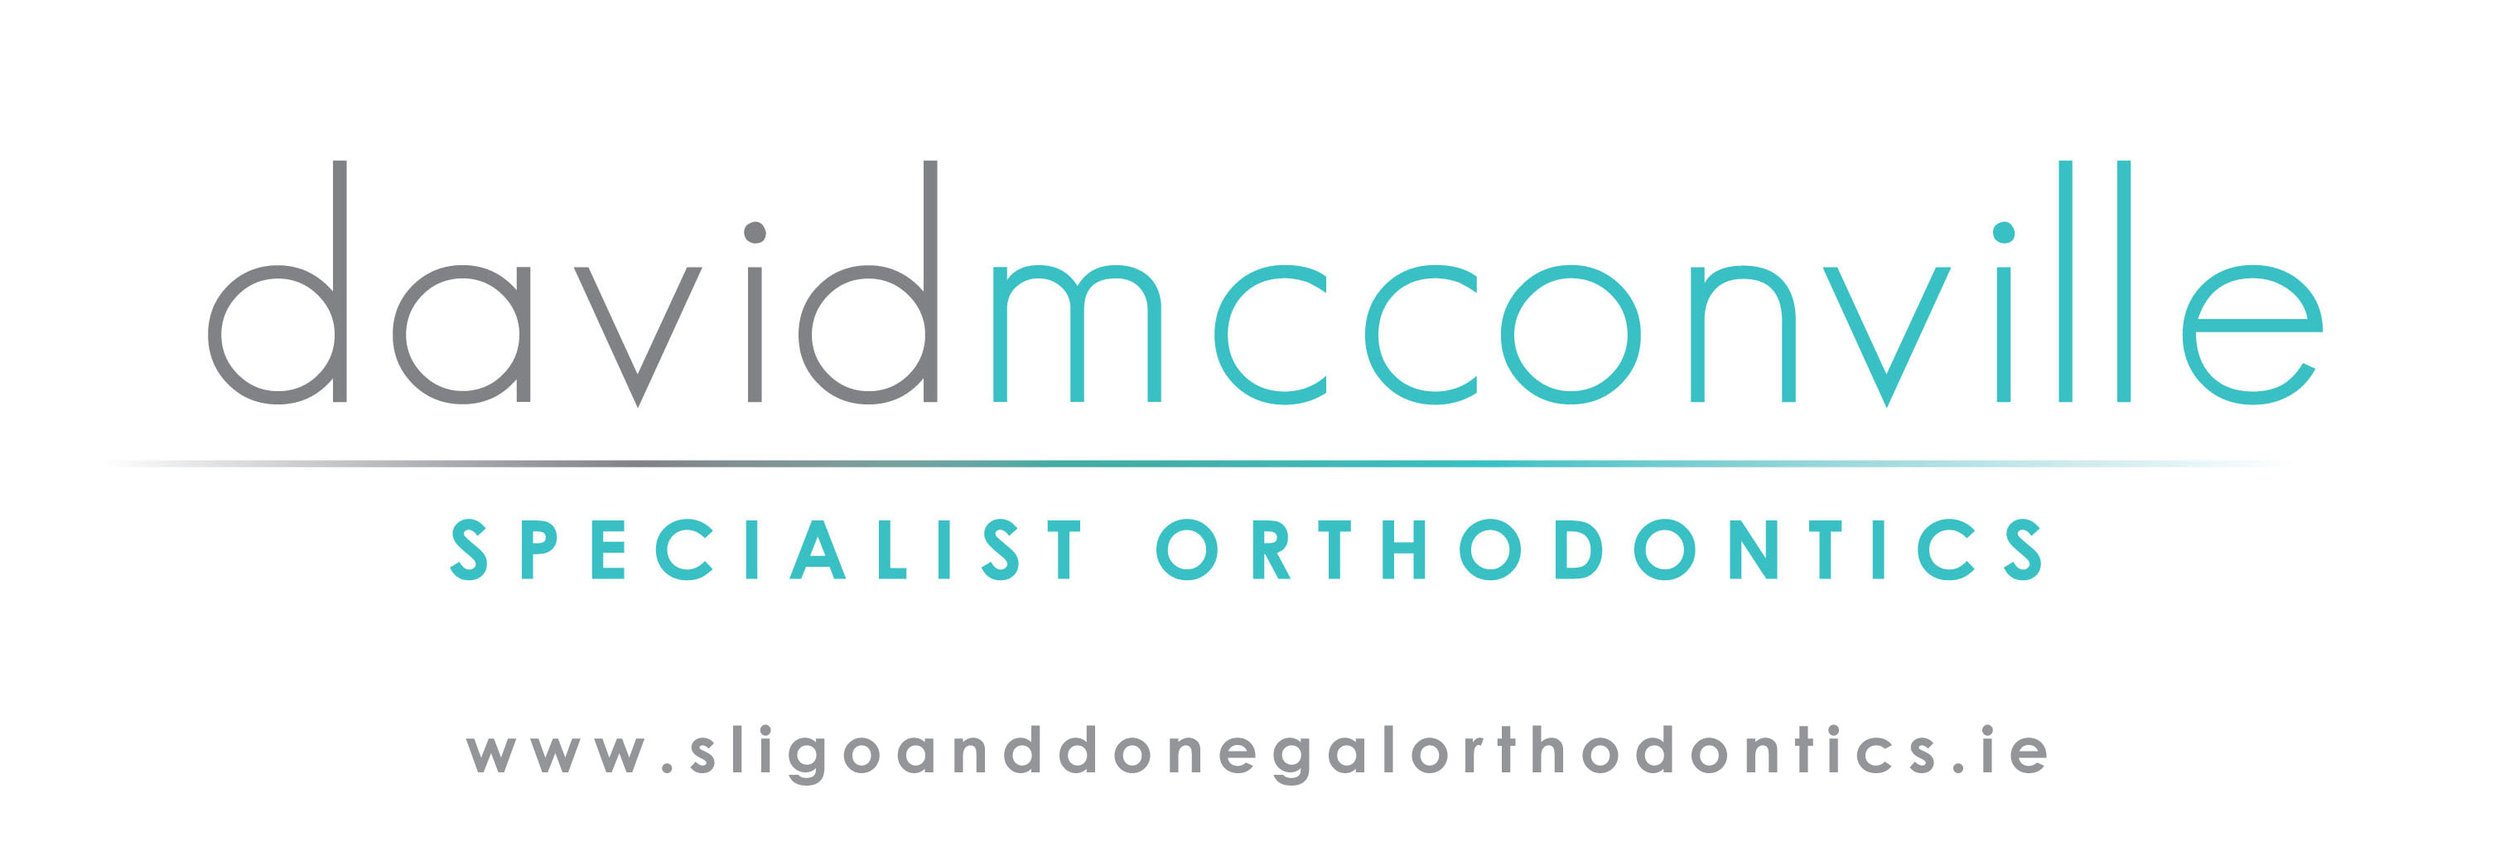 mcconville logo with website.jpg